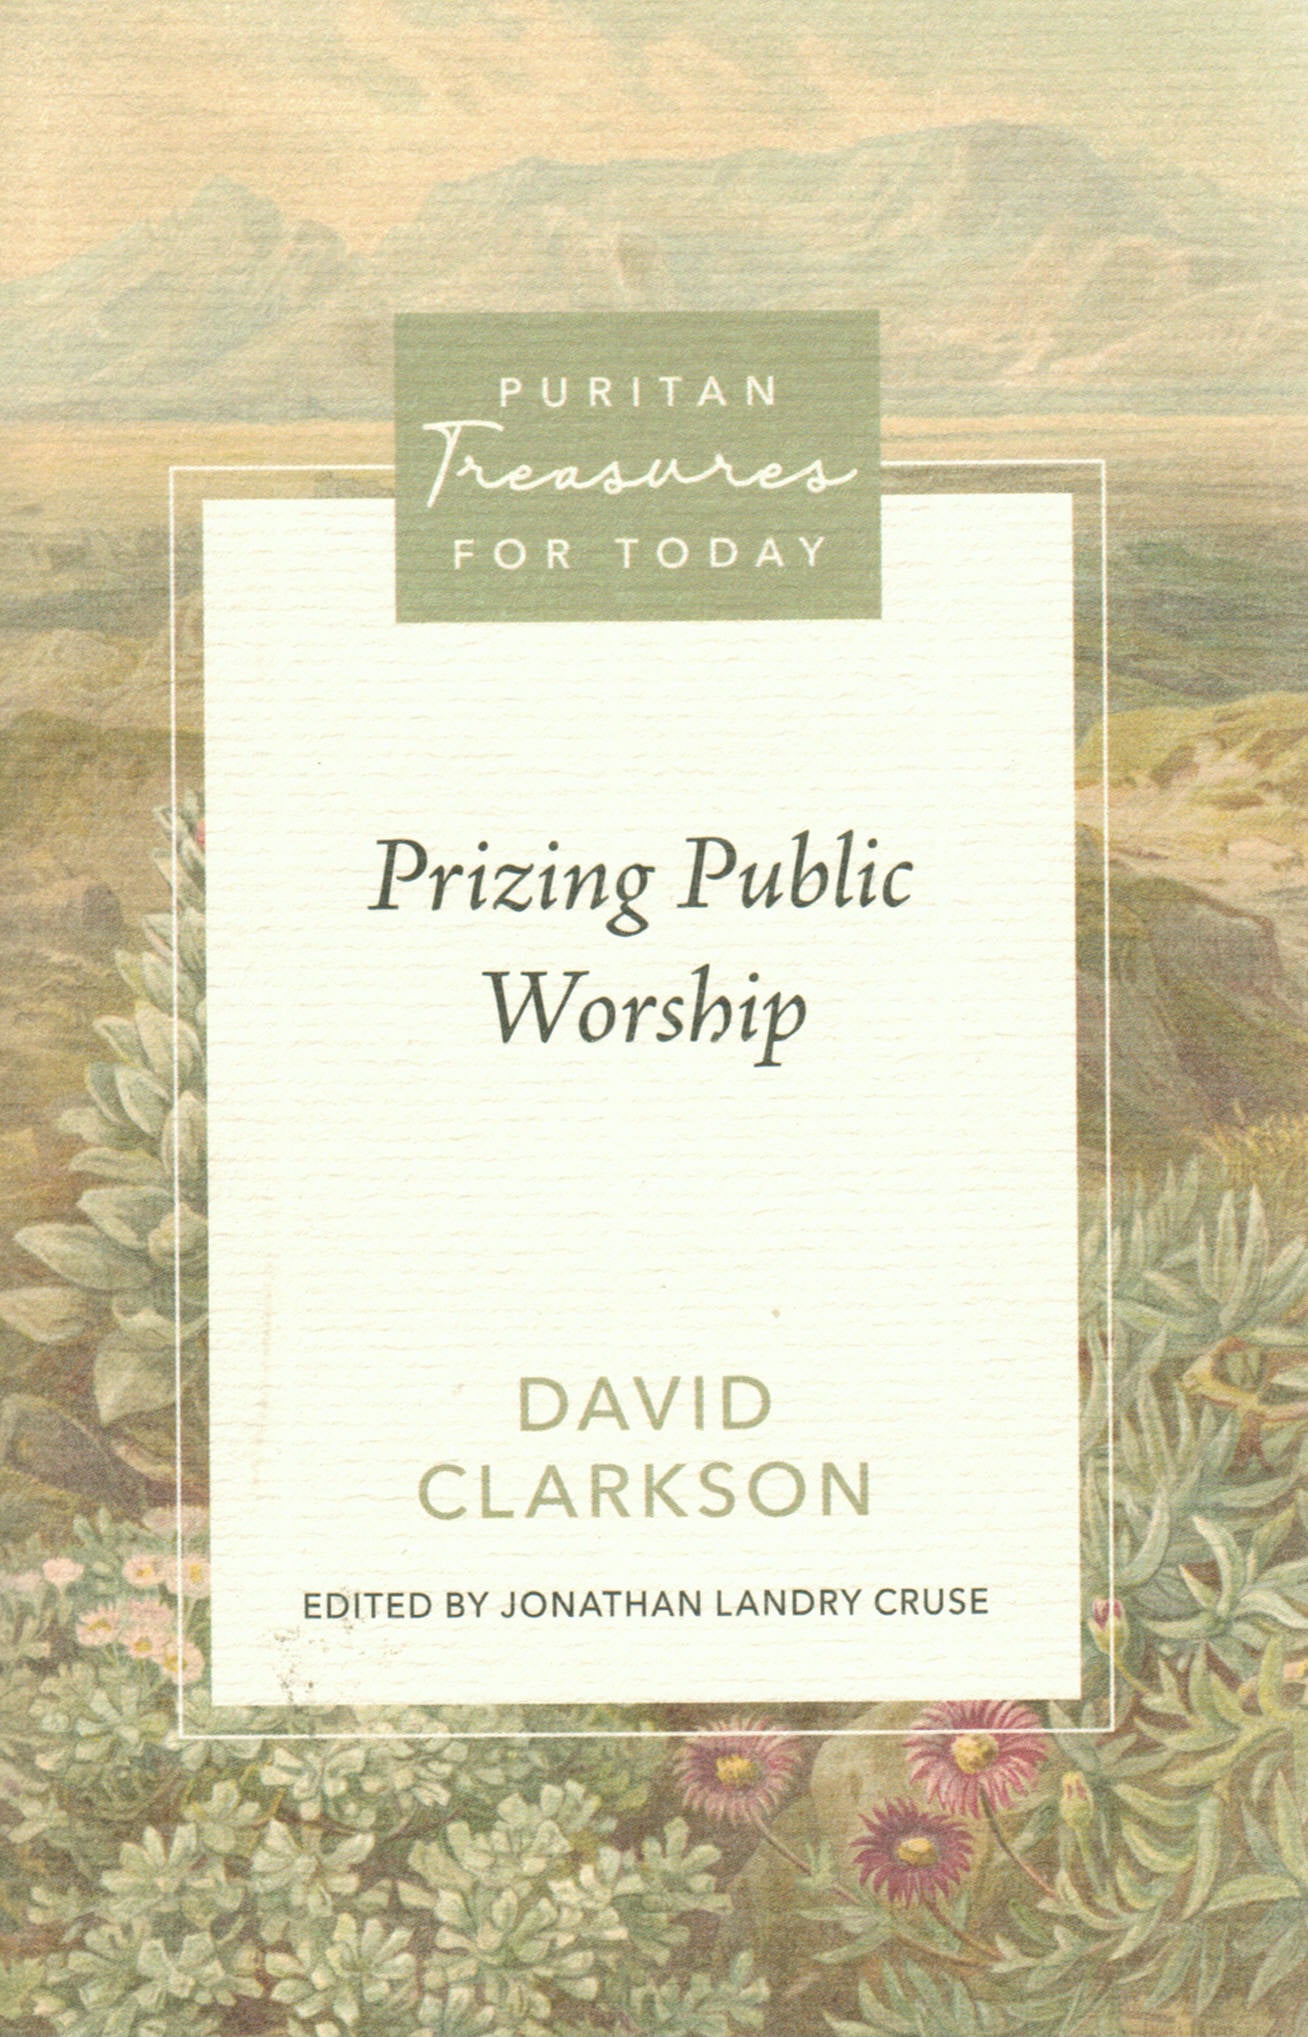 Puritan Treasures for Today - Prizing Public Worship